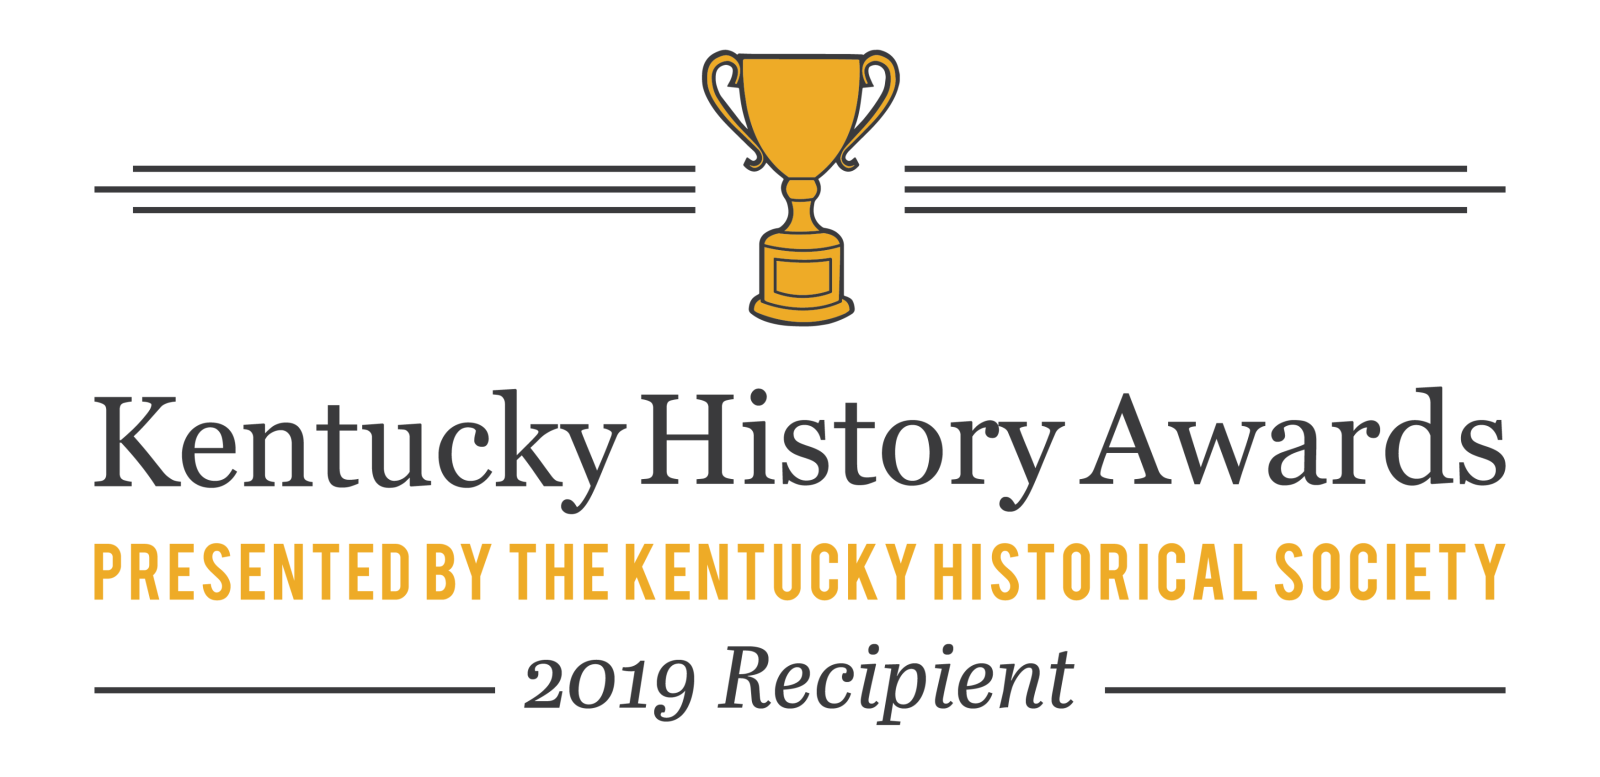 Kentucky Historical Awards